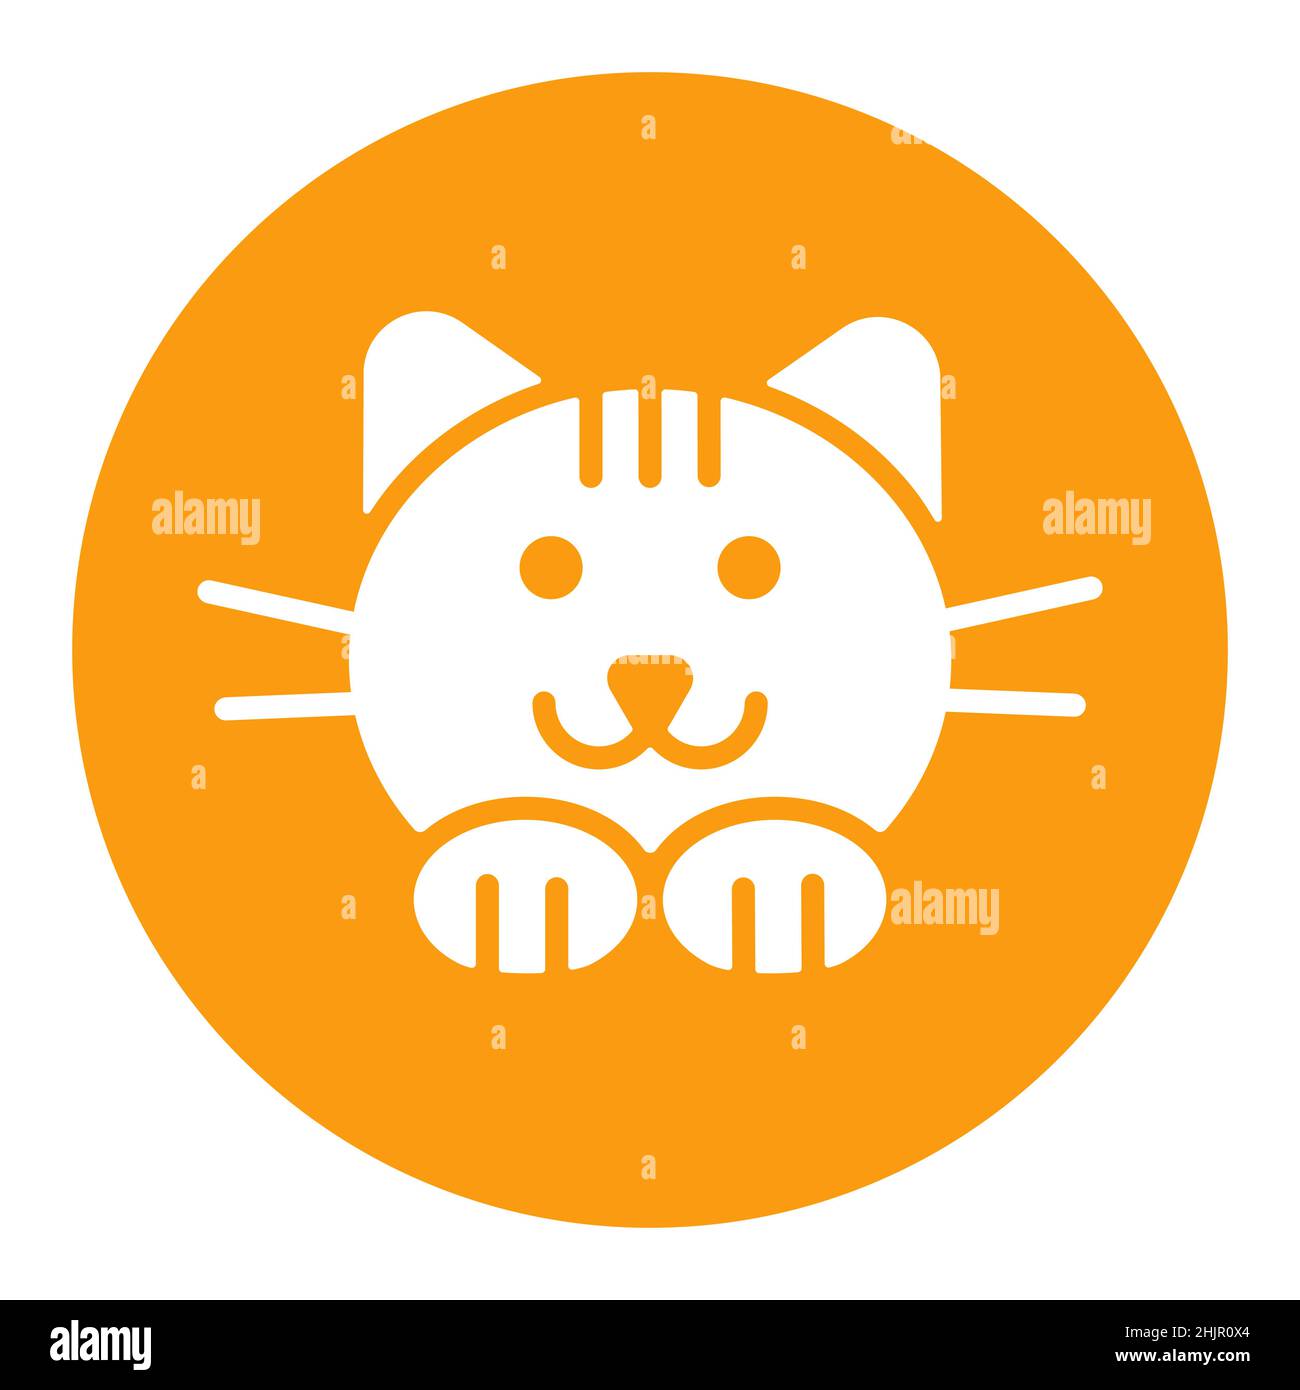 Cat emotion icon set illustration Stock Vector Images - Alamy